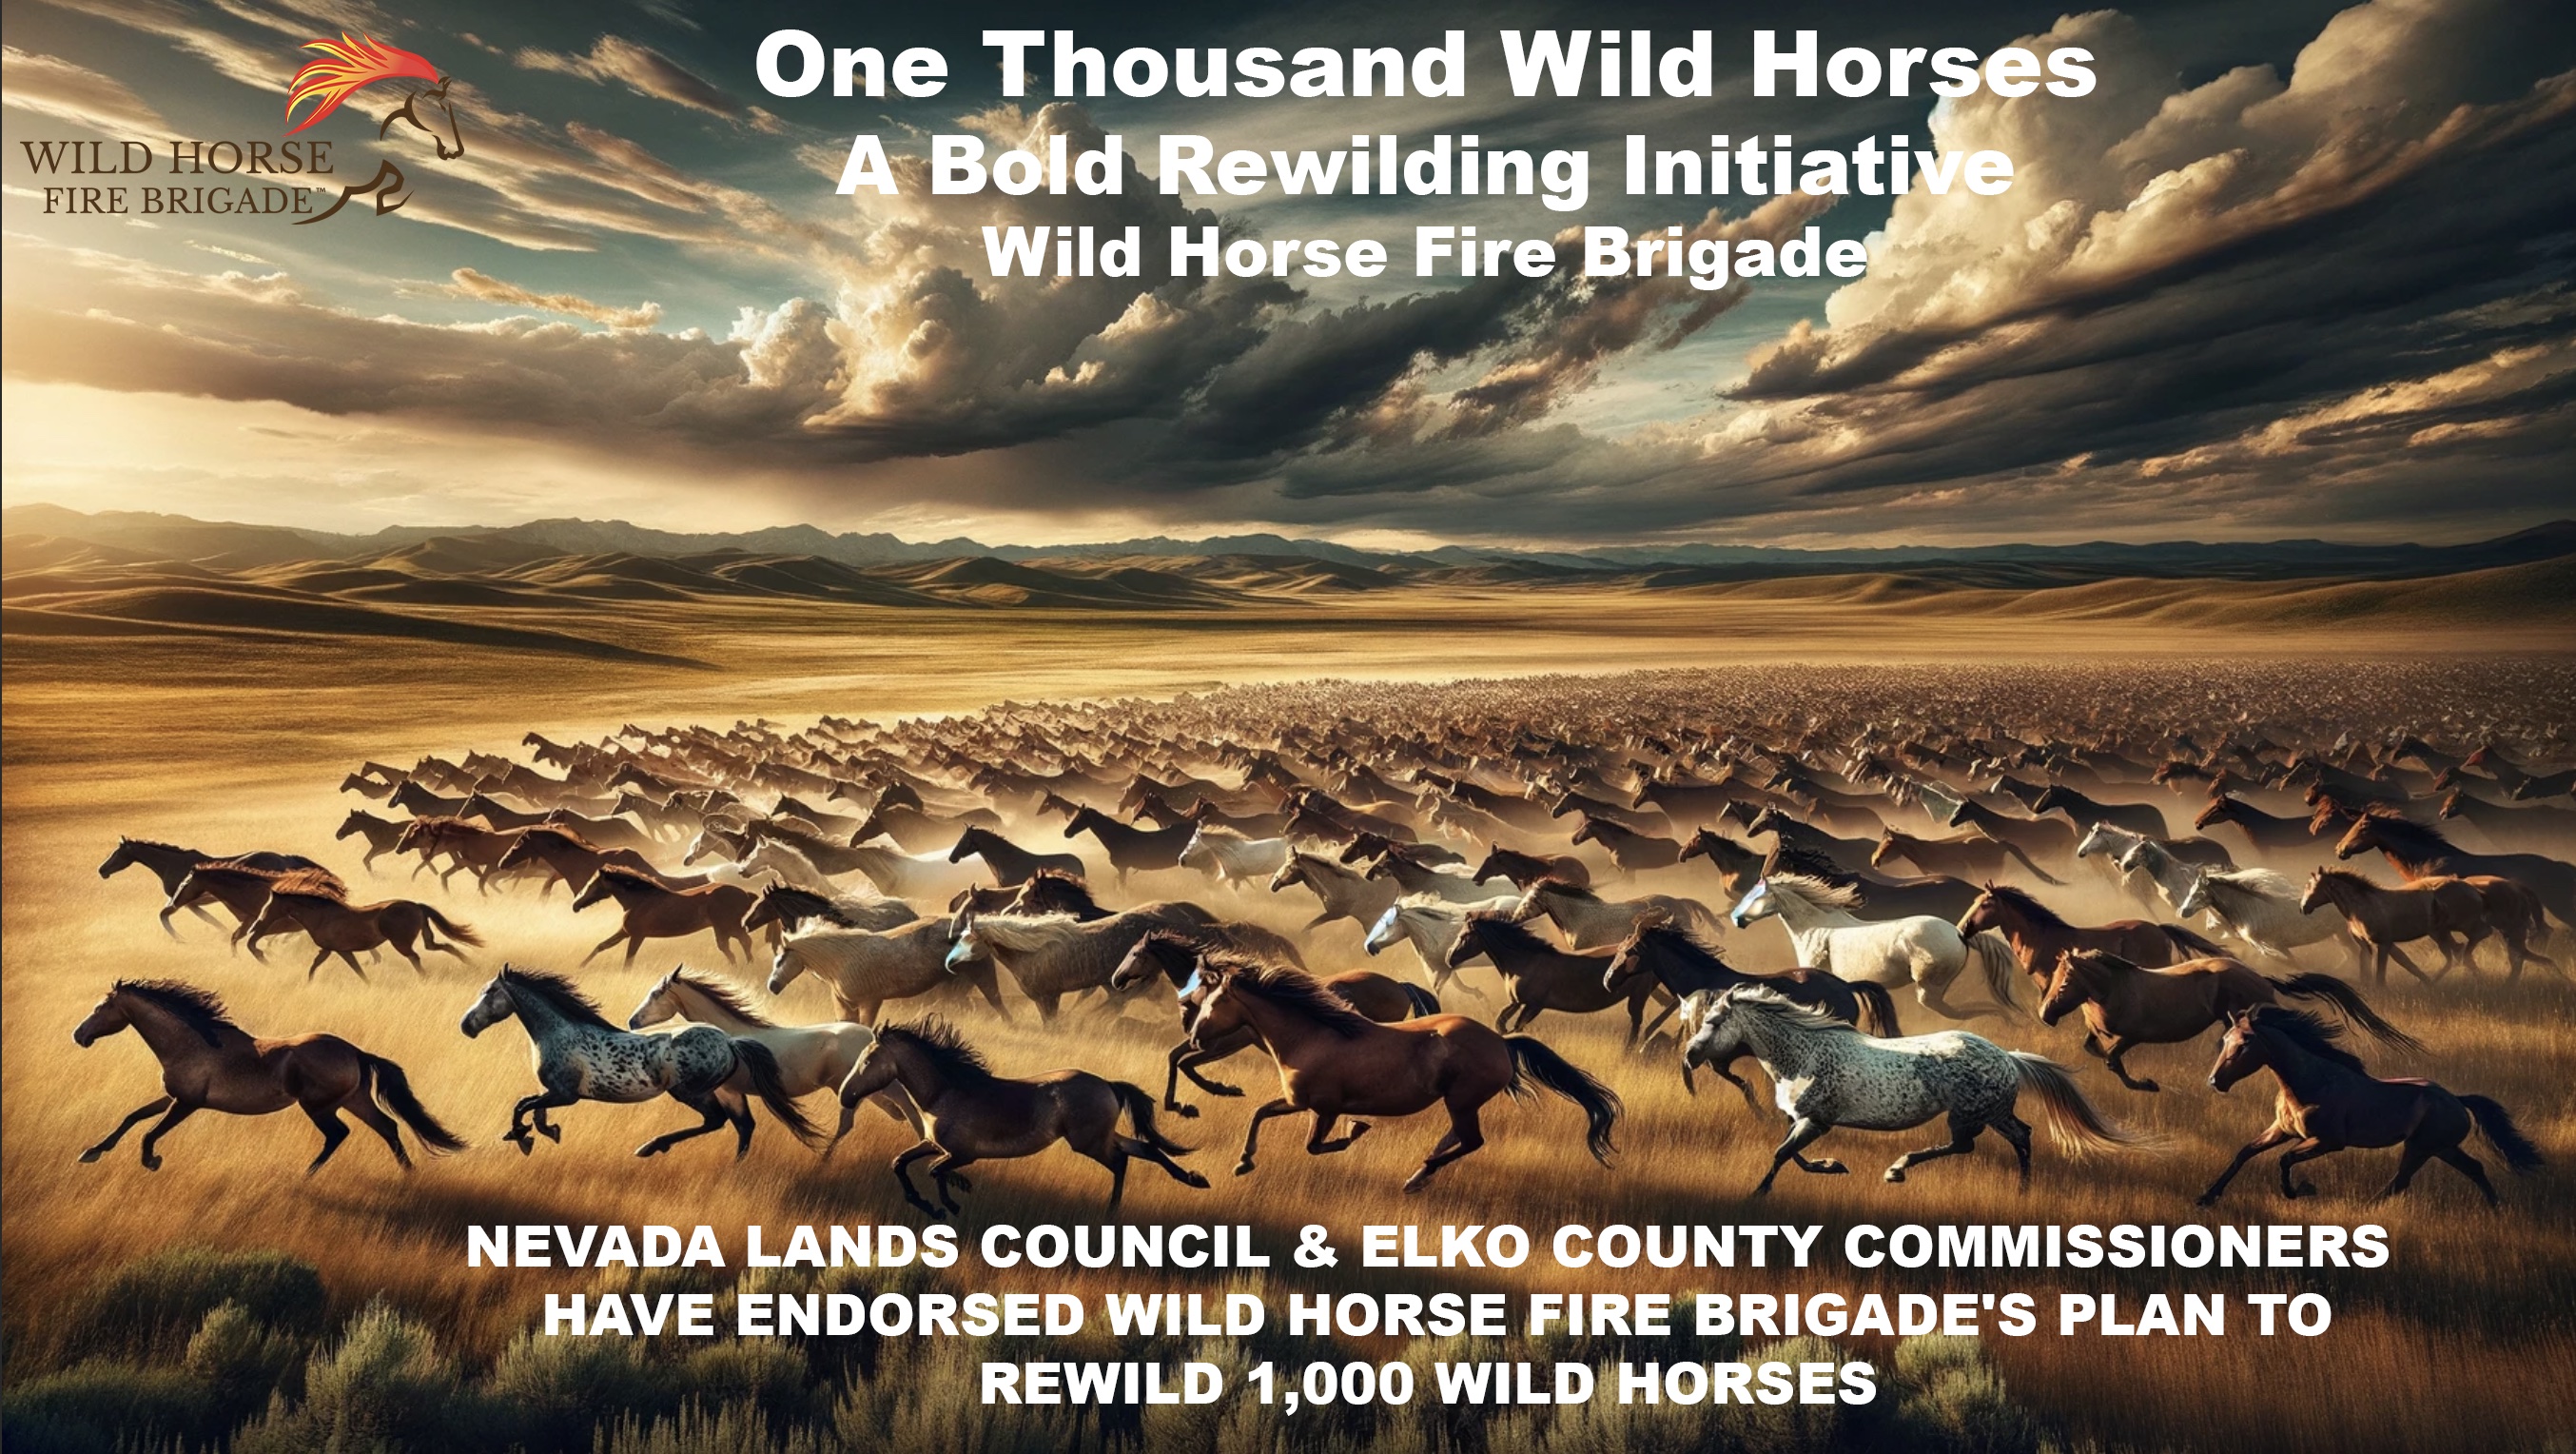 Wild Horse Fire Brigade Announces Historic Environmental Initiative on Earth Day - Plan to ReWild 1,000 Wild Horses